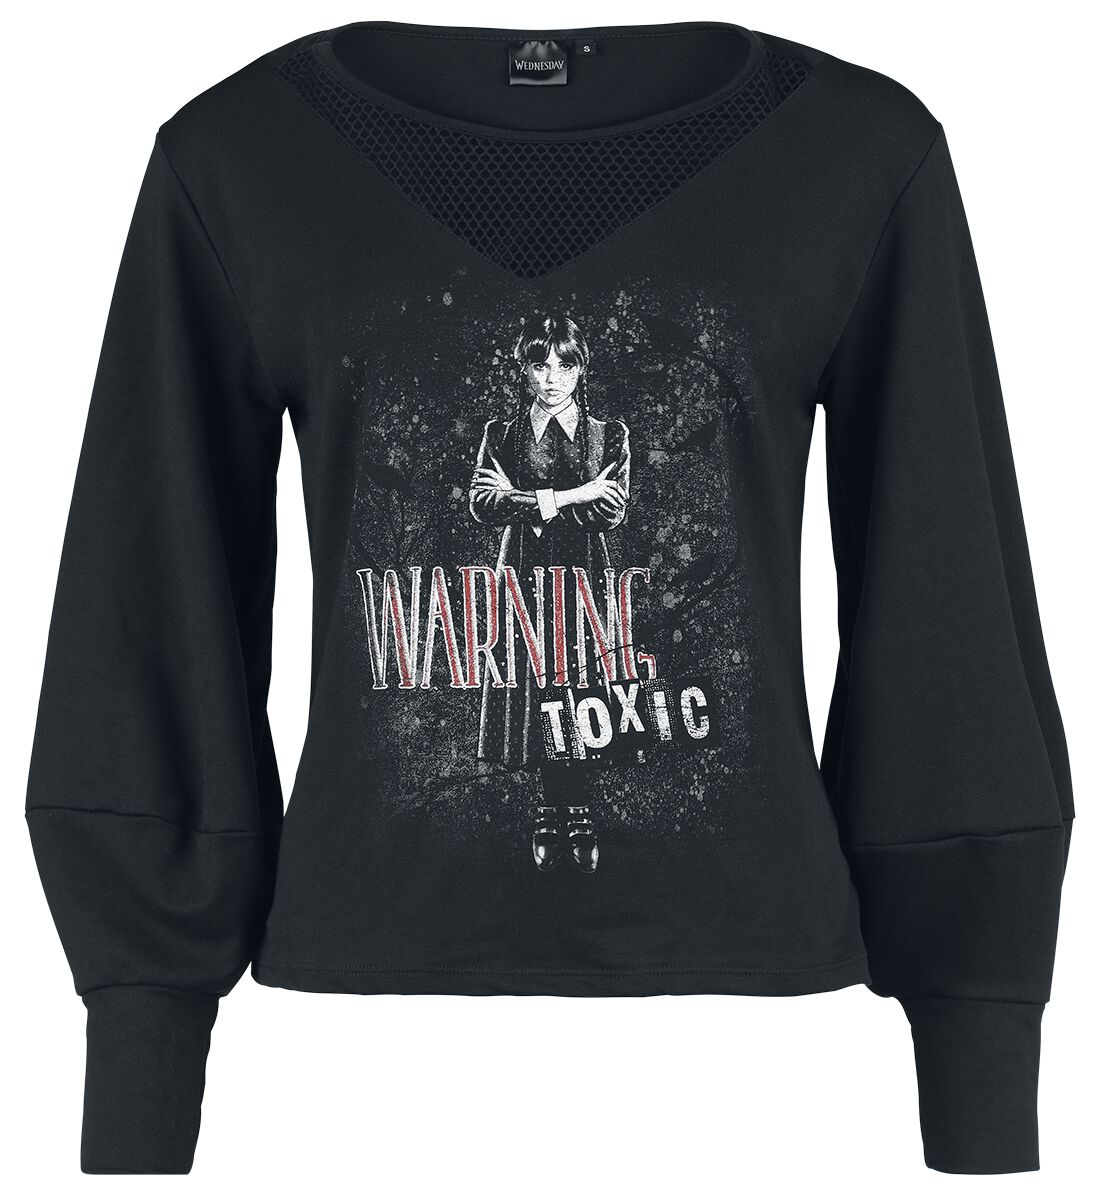 Wednesday Warning - Toxic Sweatshirt schwarz in M